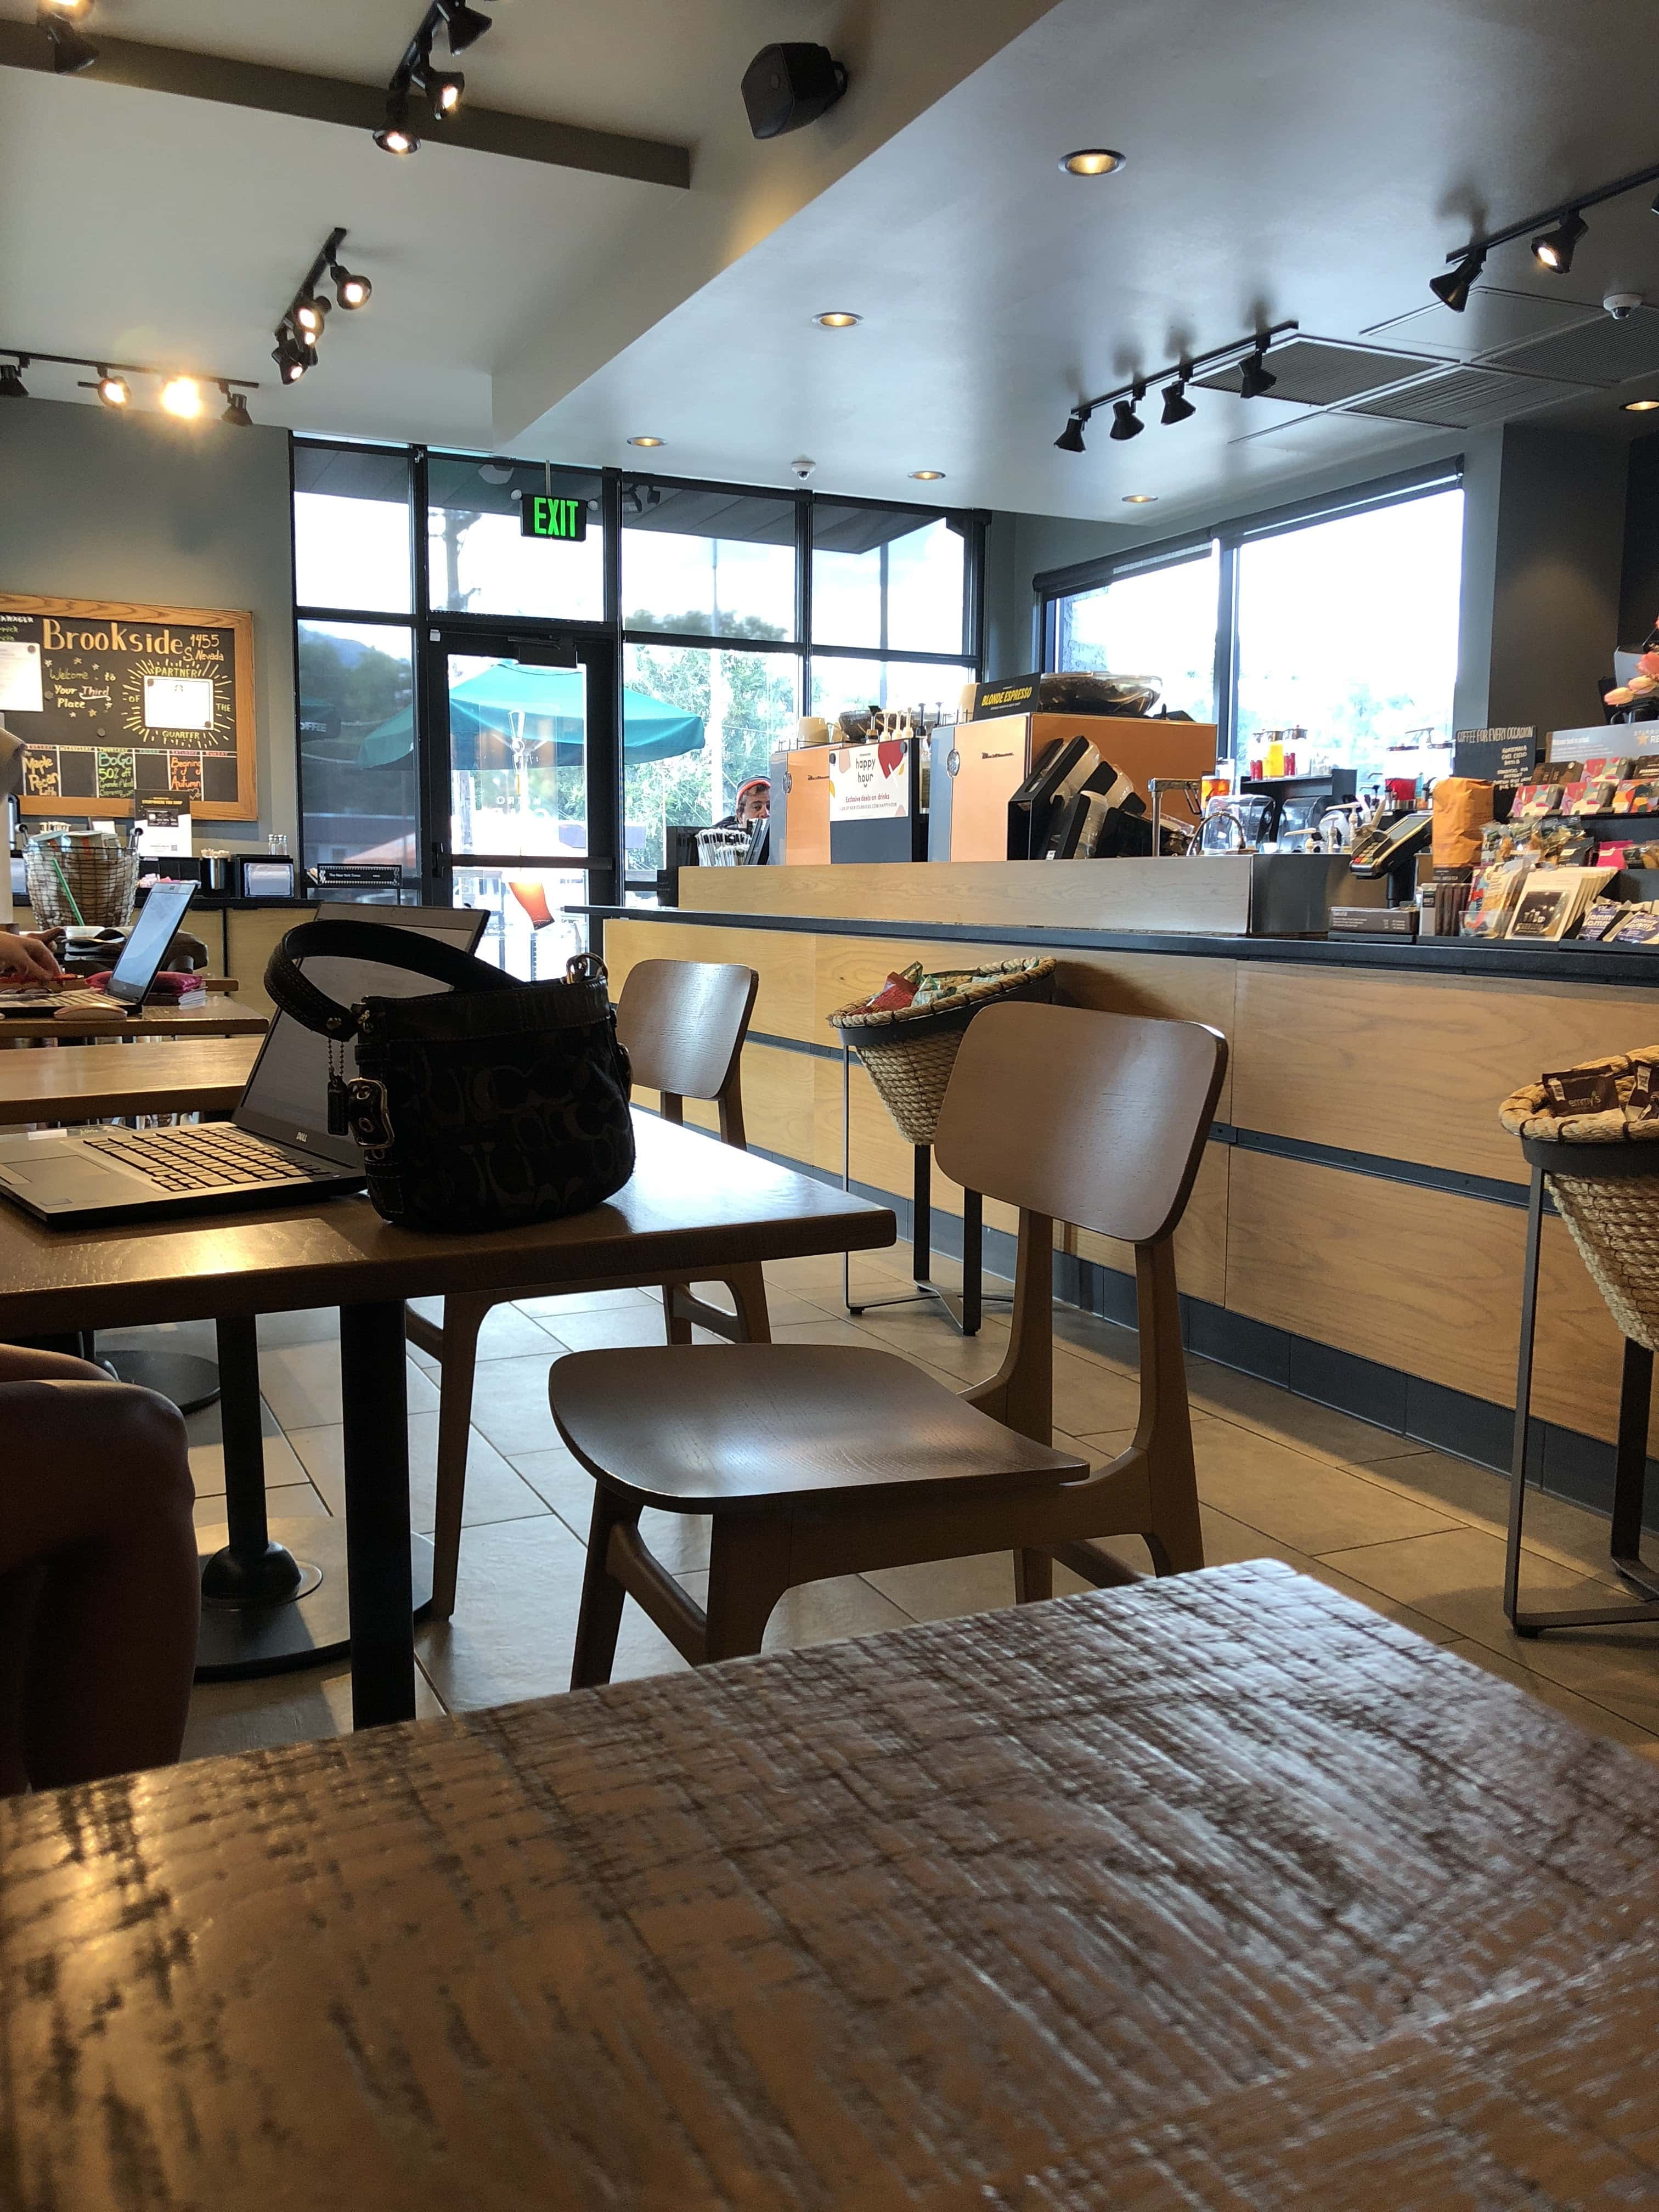 Starbucks - Colorado Springs (CO 80905), US, little coffee